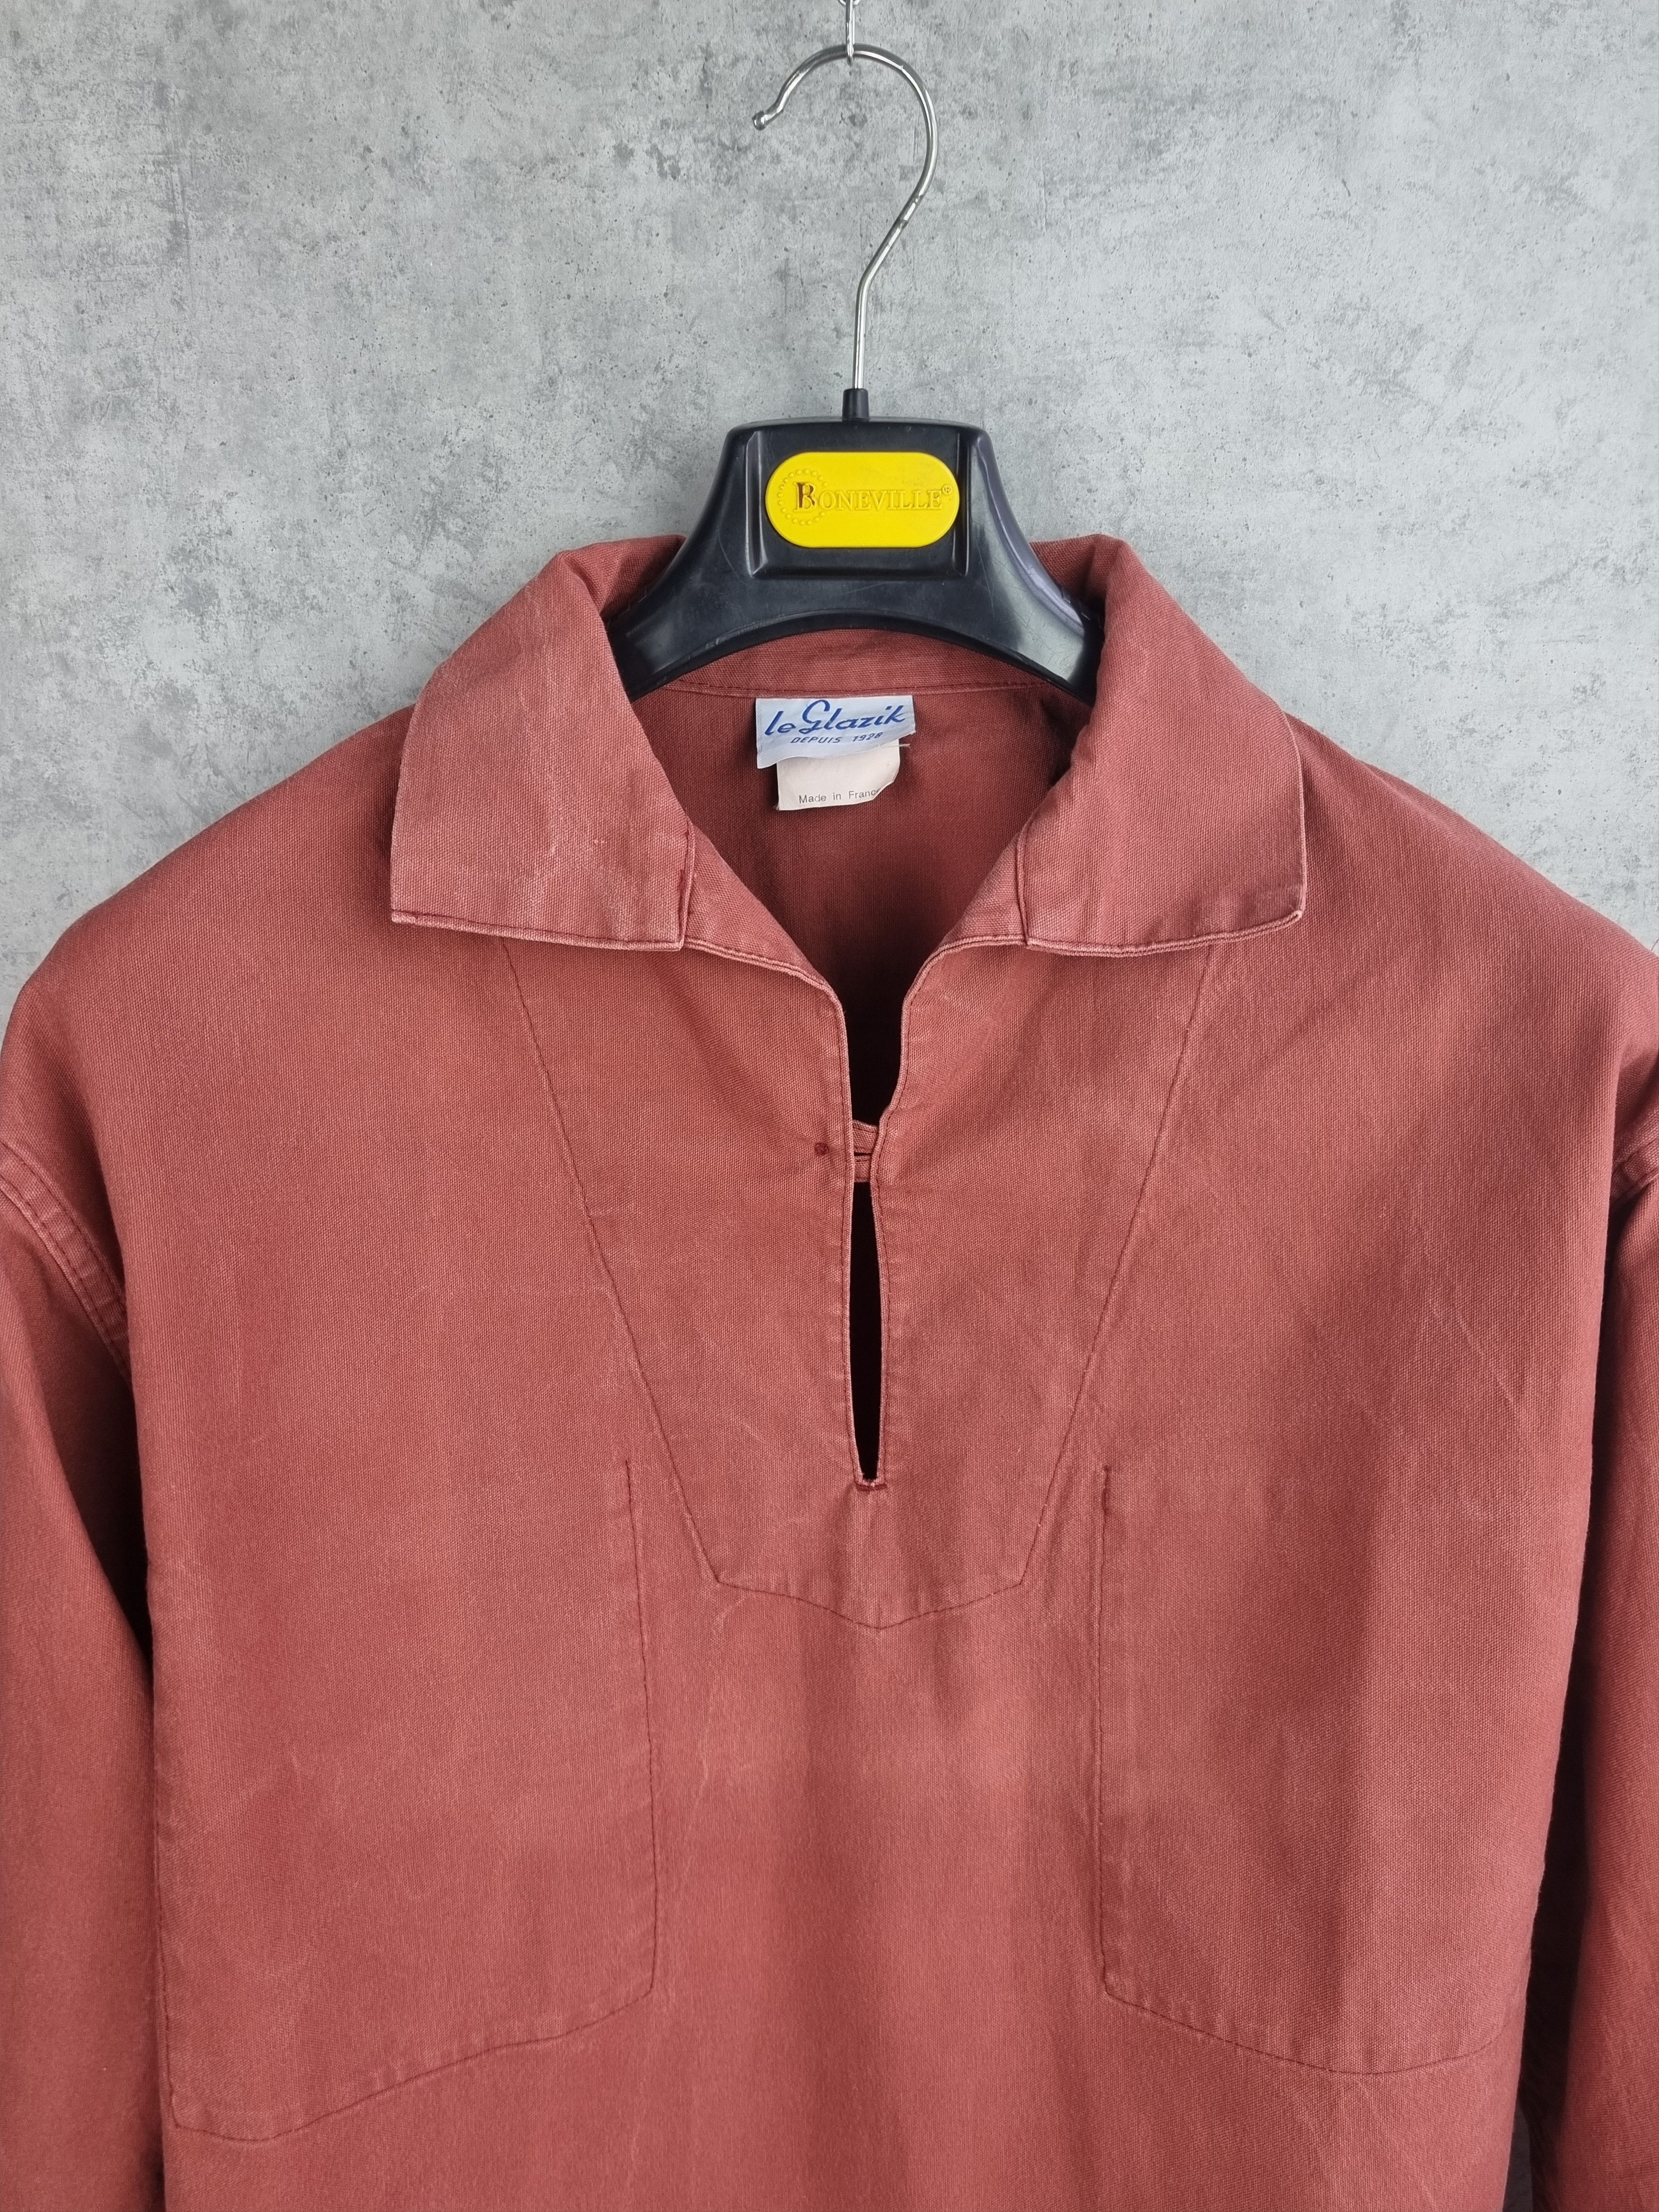 Vintage Rare Vintage Le Glazik worker fisherman shirt | Grailed